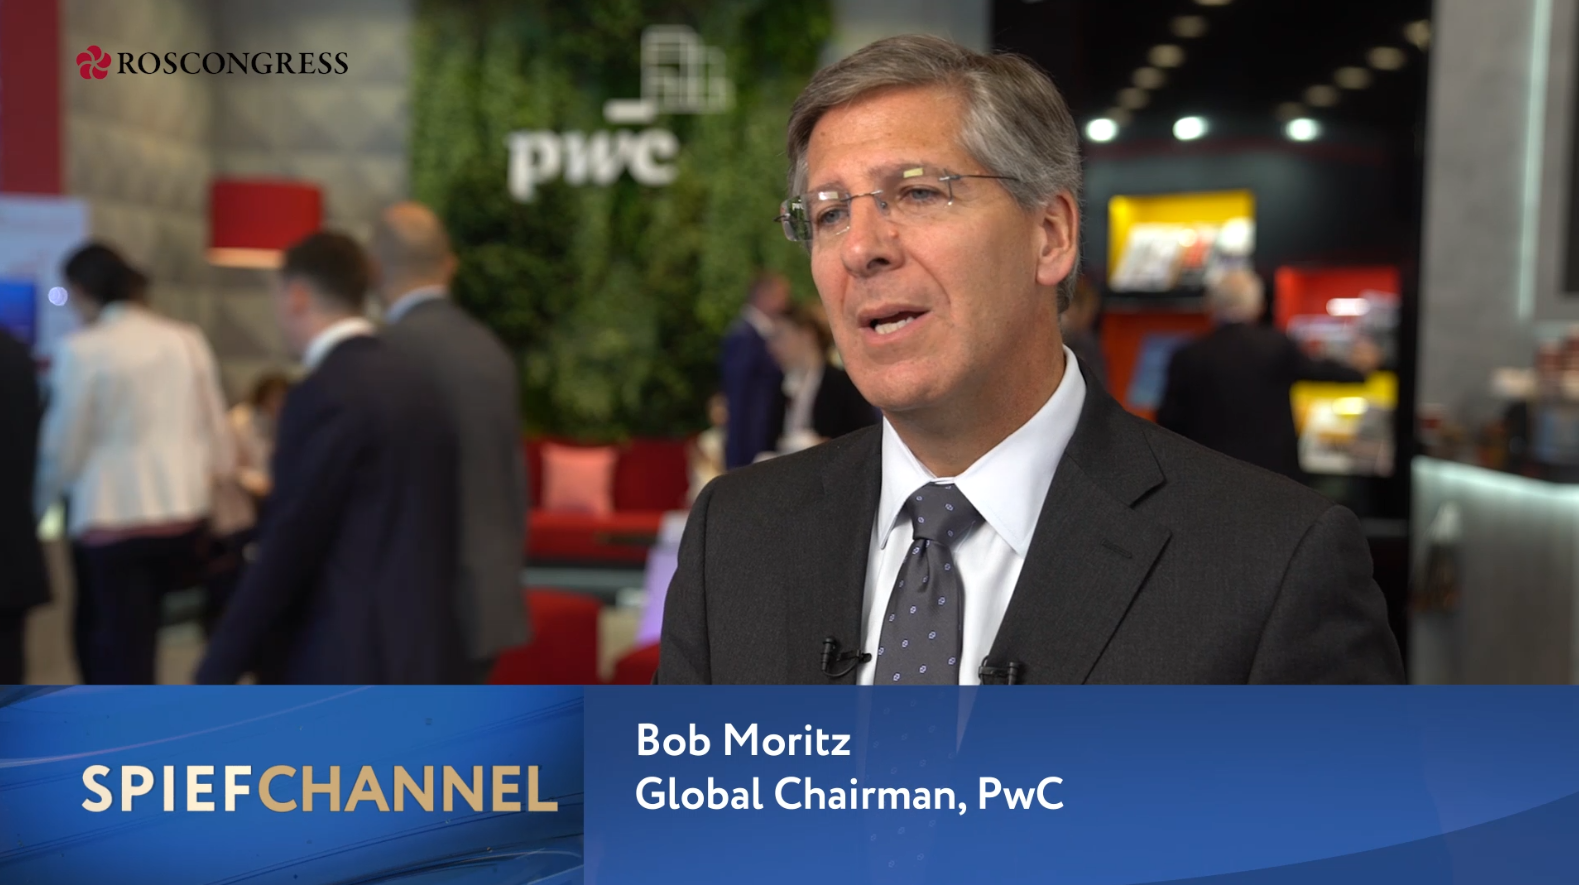 Bob Moritz, Global Chairman, PwC Global